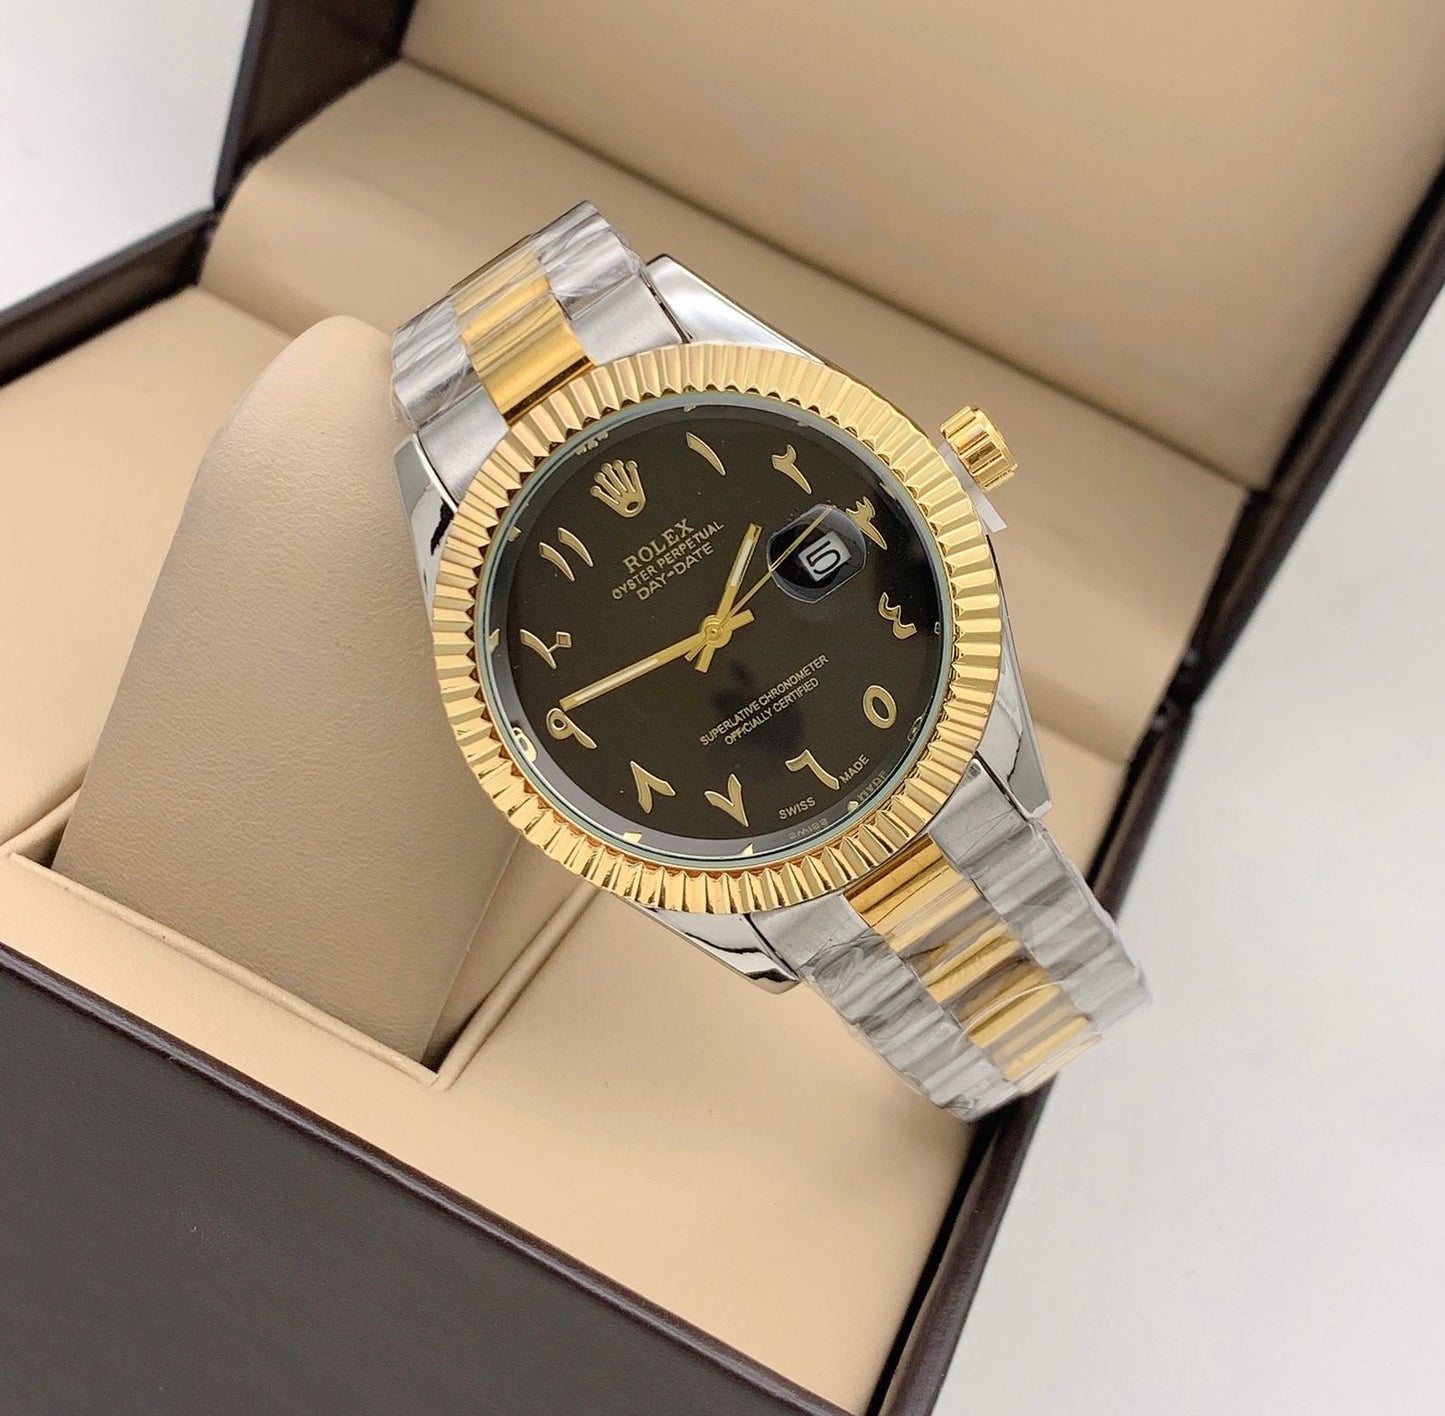 Rolex Qurtz Movement Gold Case & Black Dial Vintage Multicolor Strap Watch Men's - Best Watch For Causal Use RLX-1134